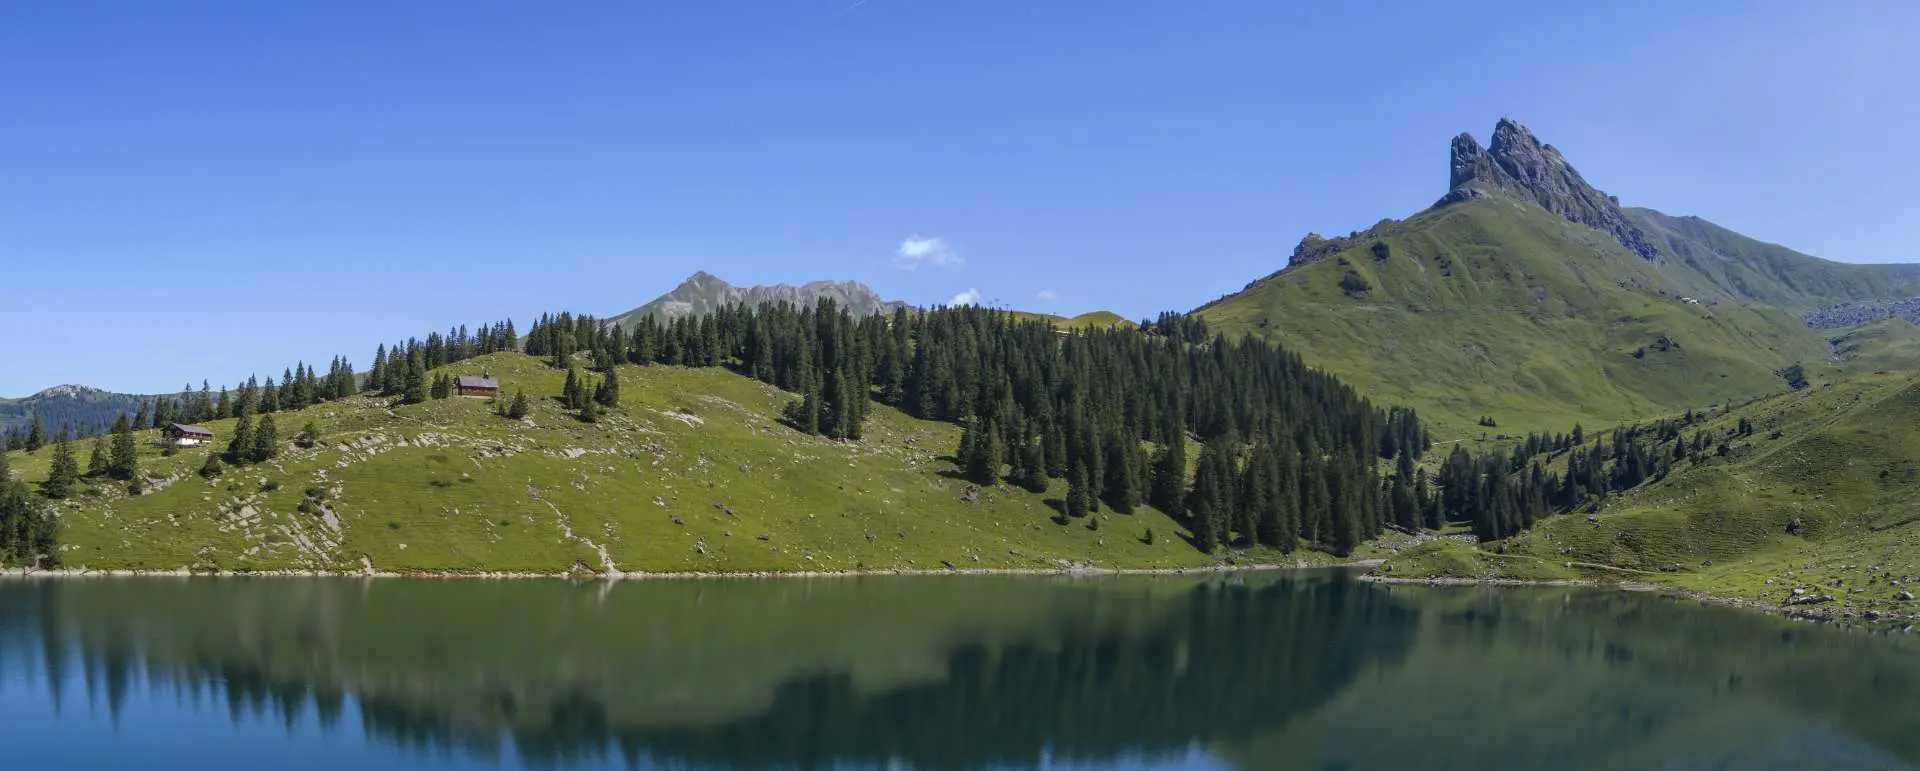 Nidwalden - the destination for hikers